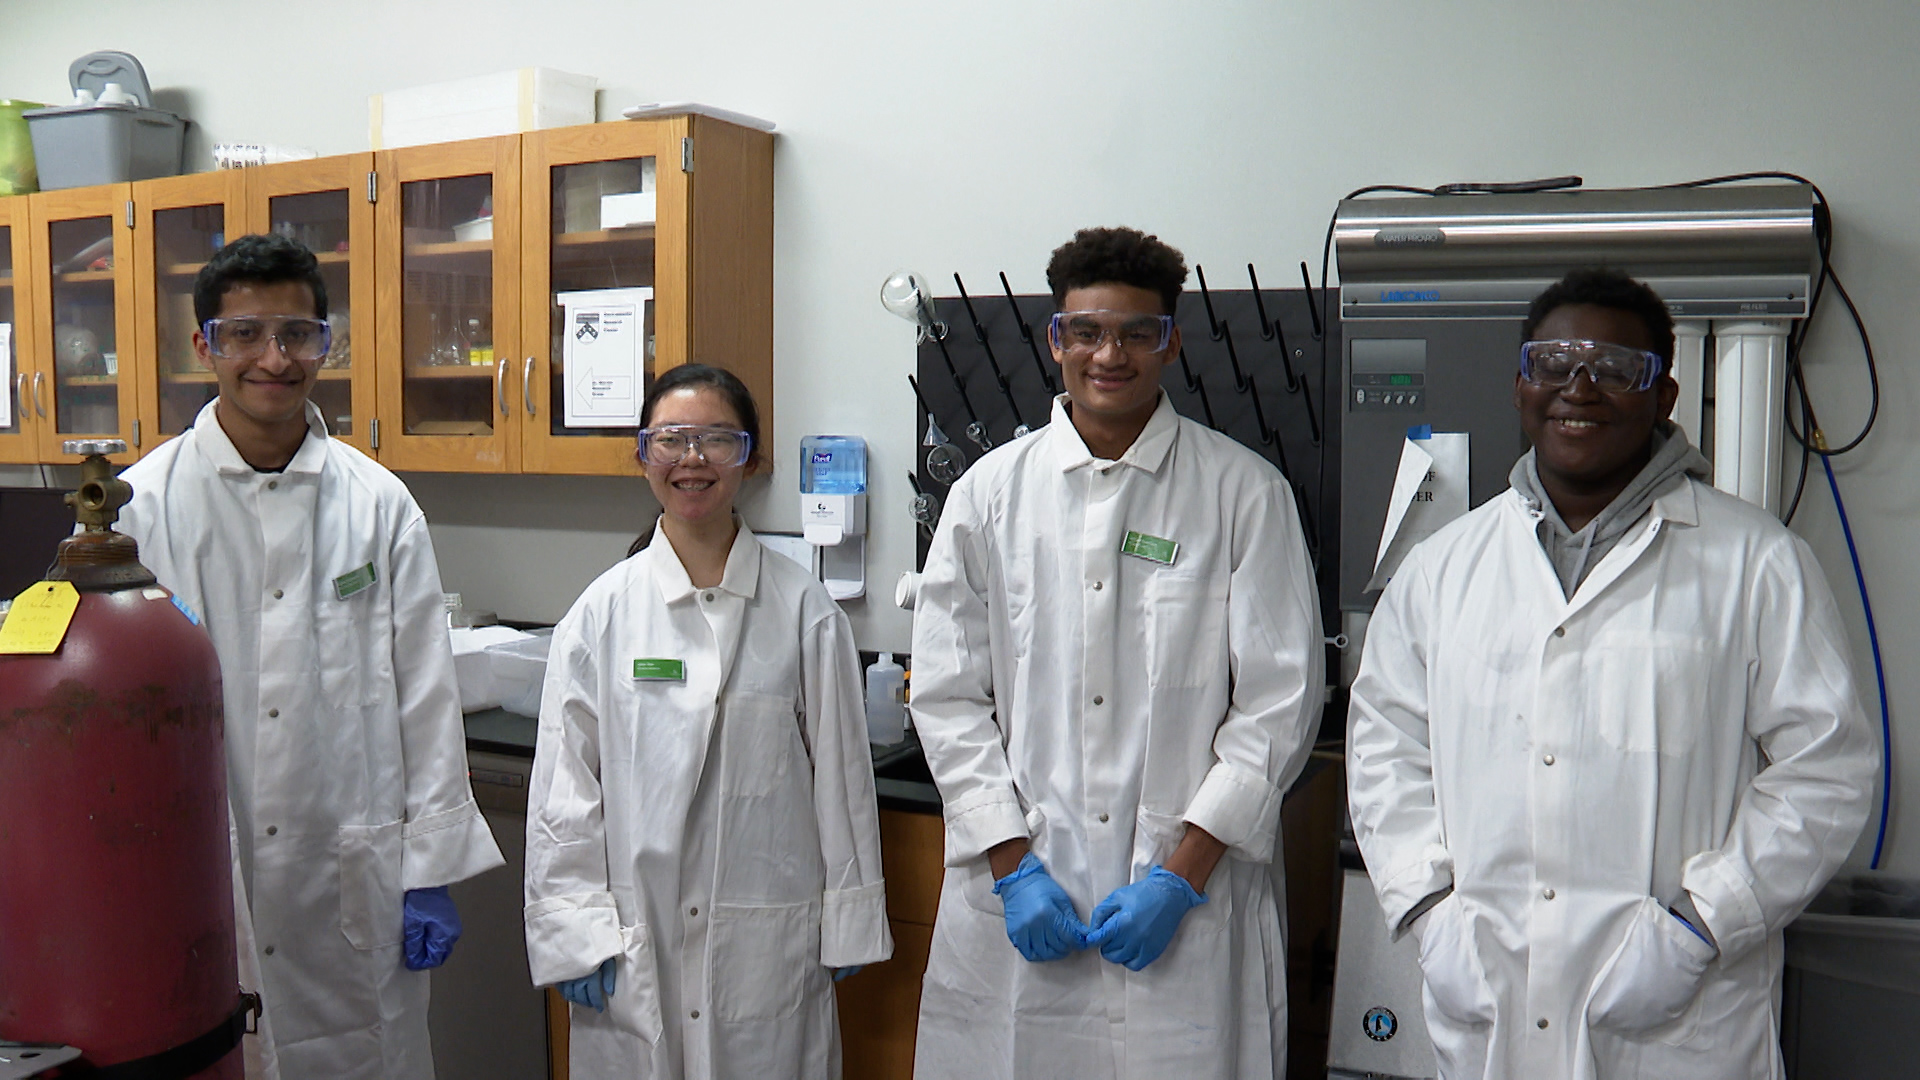 Georgia Gwinnett College’s Project SEED program prepares high school students for STEM careers